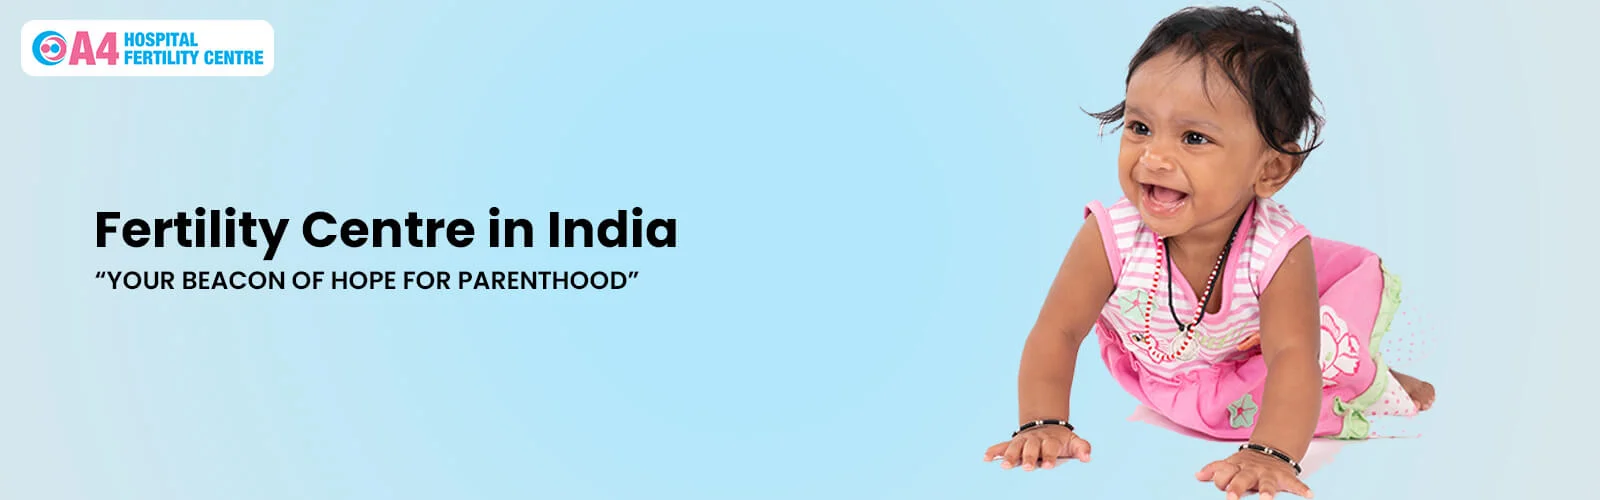 fertility-centre-in-india